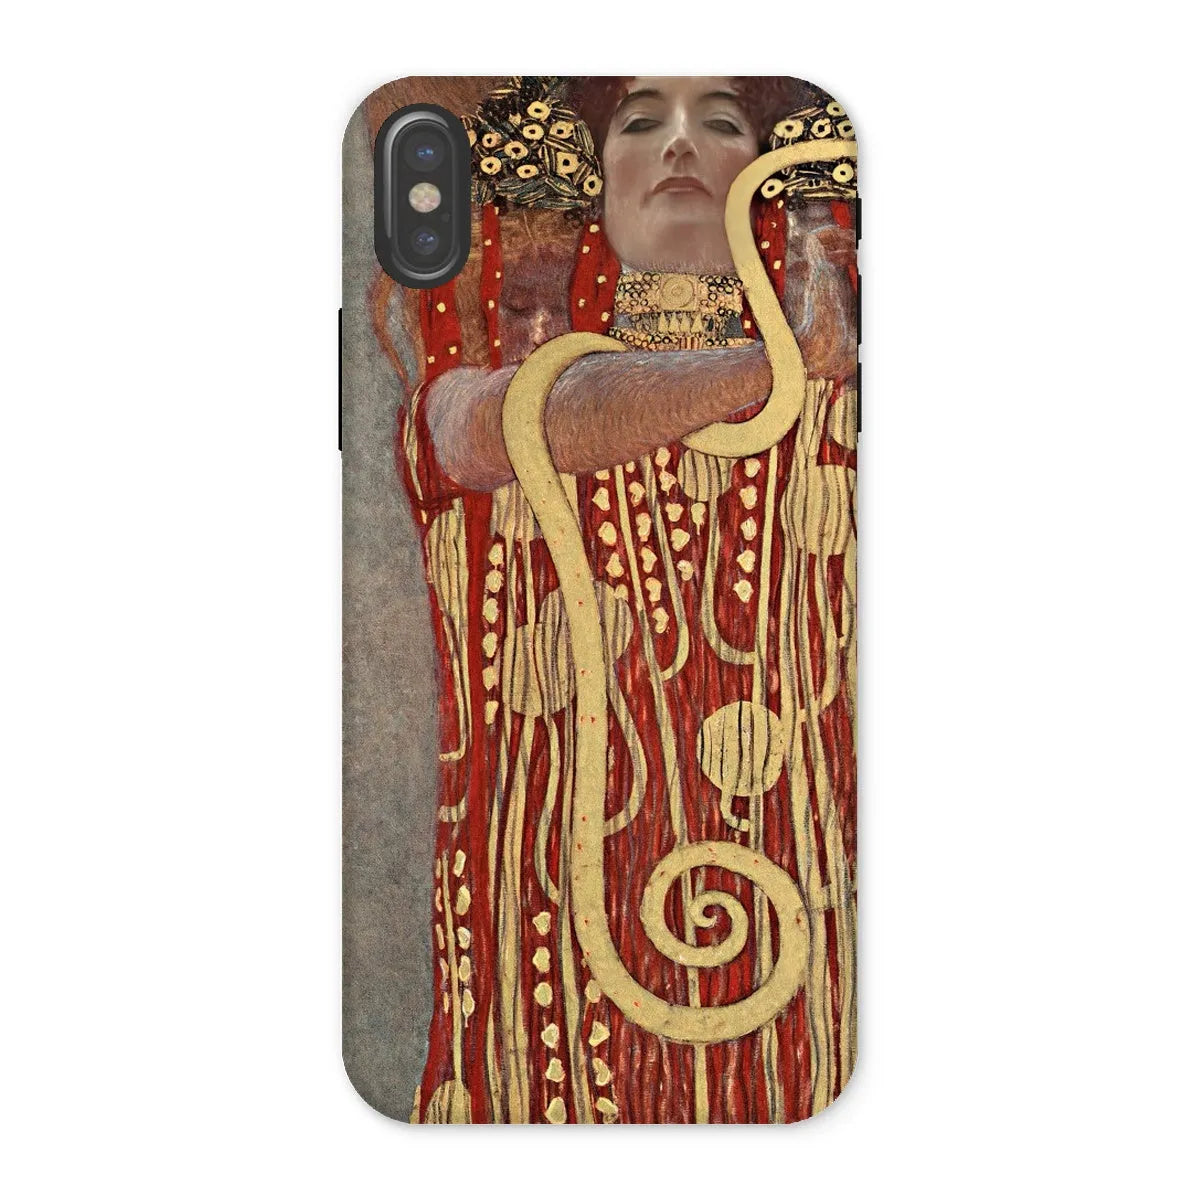 Hygieia - Vienna Succession Phone Case - Gustav Klimt - Iphone x / Matte - Mobile Phone Cases - Aesthetic Art